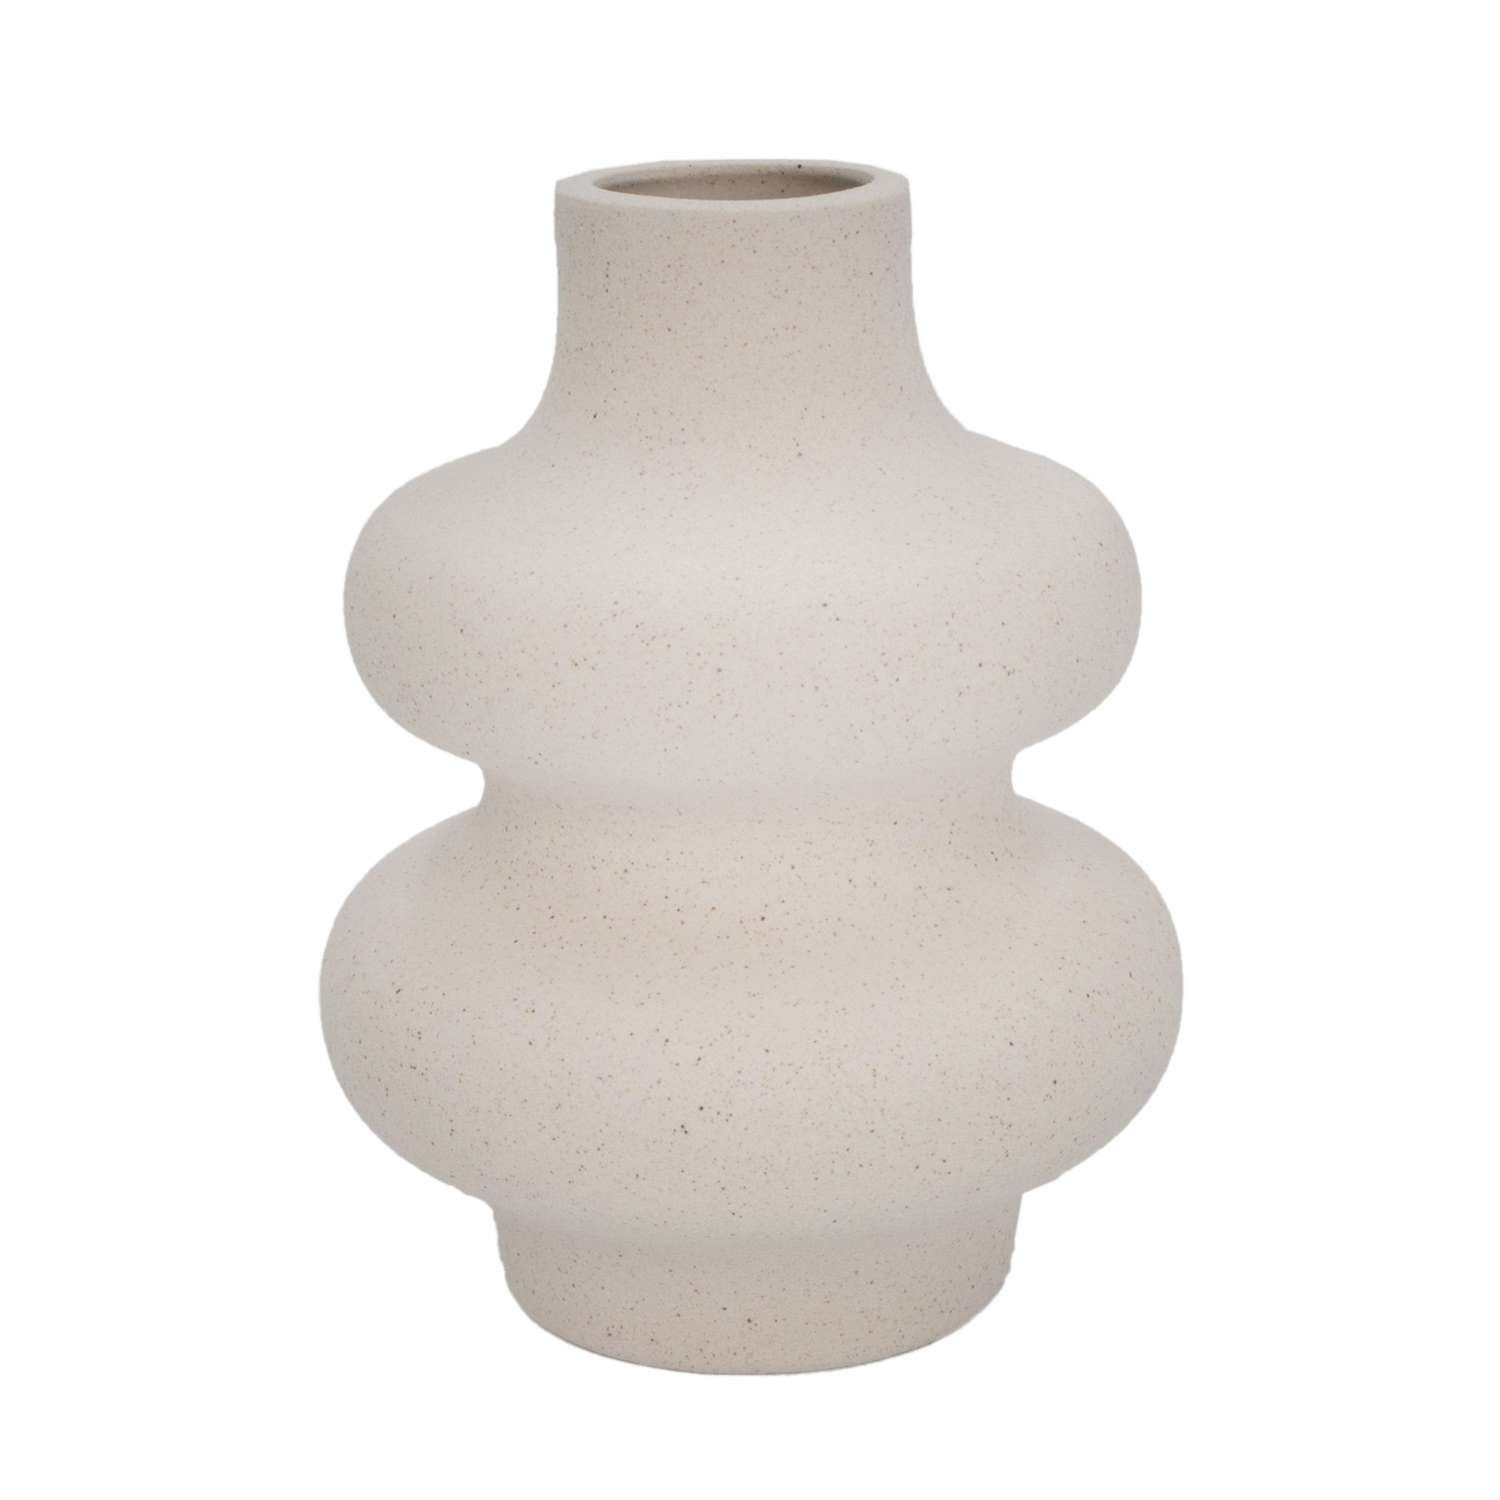 Intirilife Dekovase, Keramik Vase in Creme Weiß - 11.5 x 15.5 cm